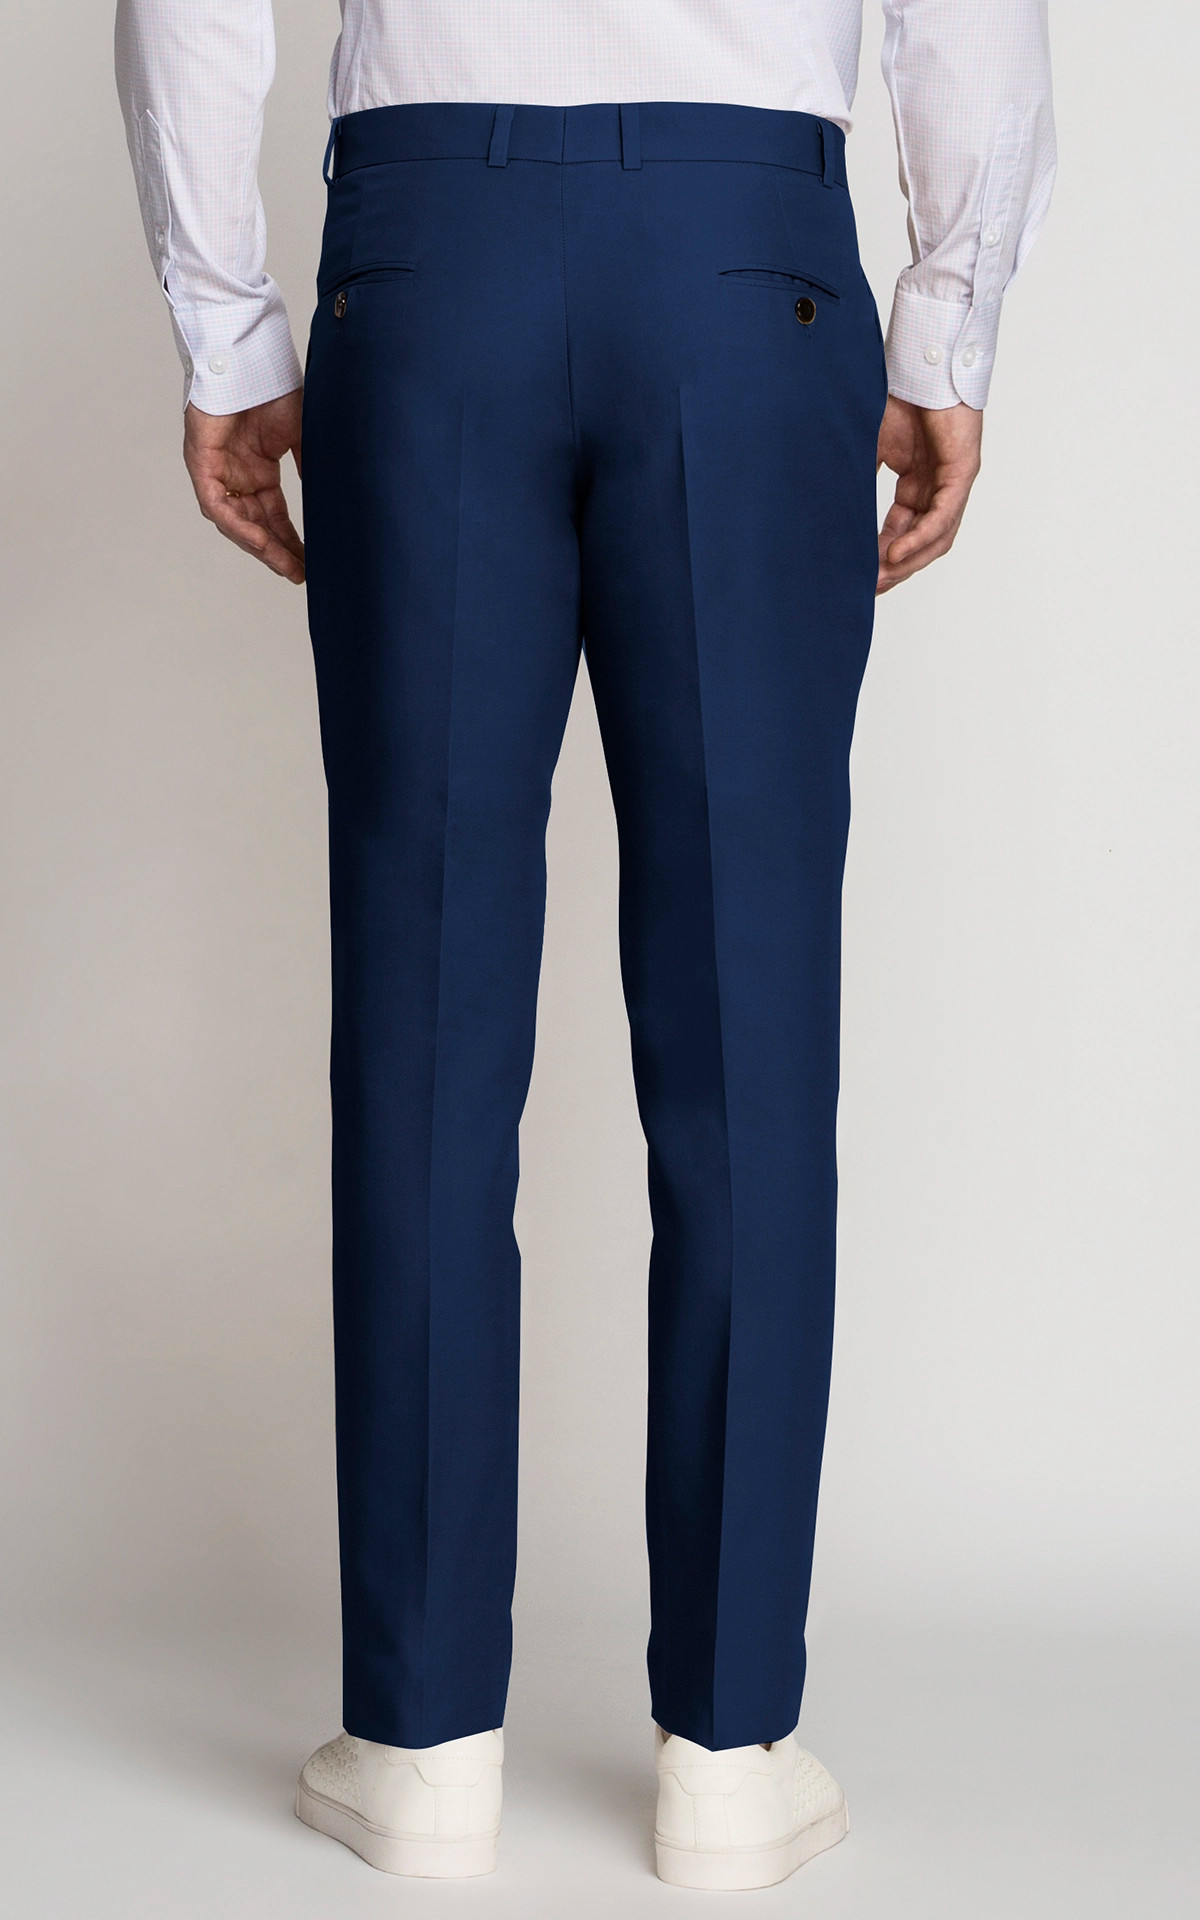 Cotton Navy Blue Mens Three Quarter Pant, Regular Fit at Rs 675/piece in  Chandannagar